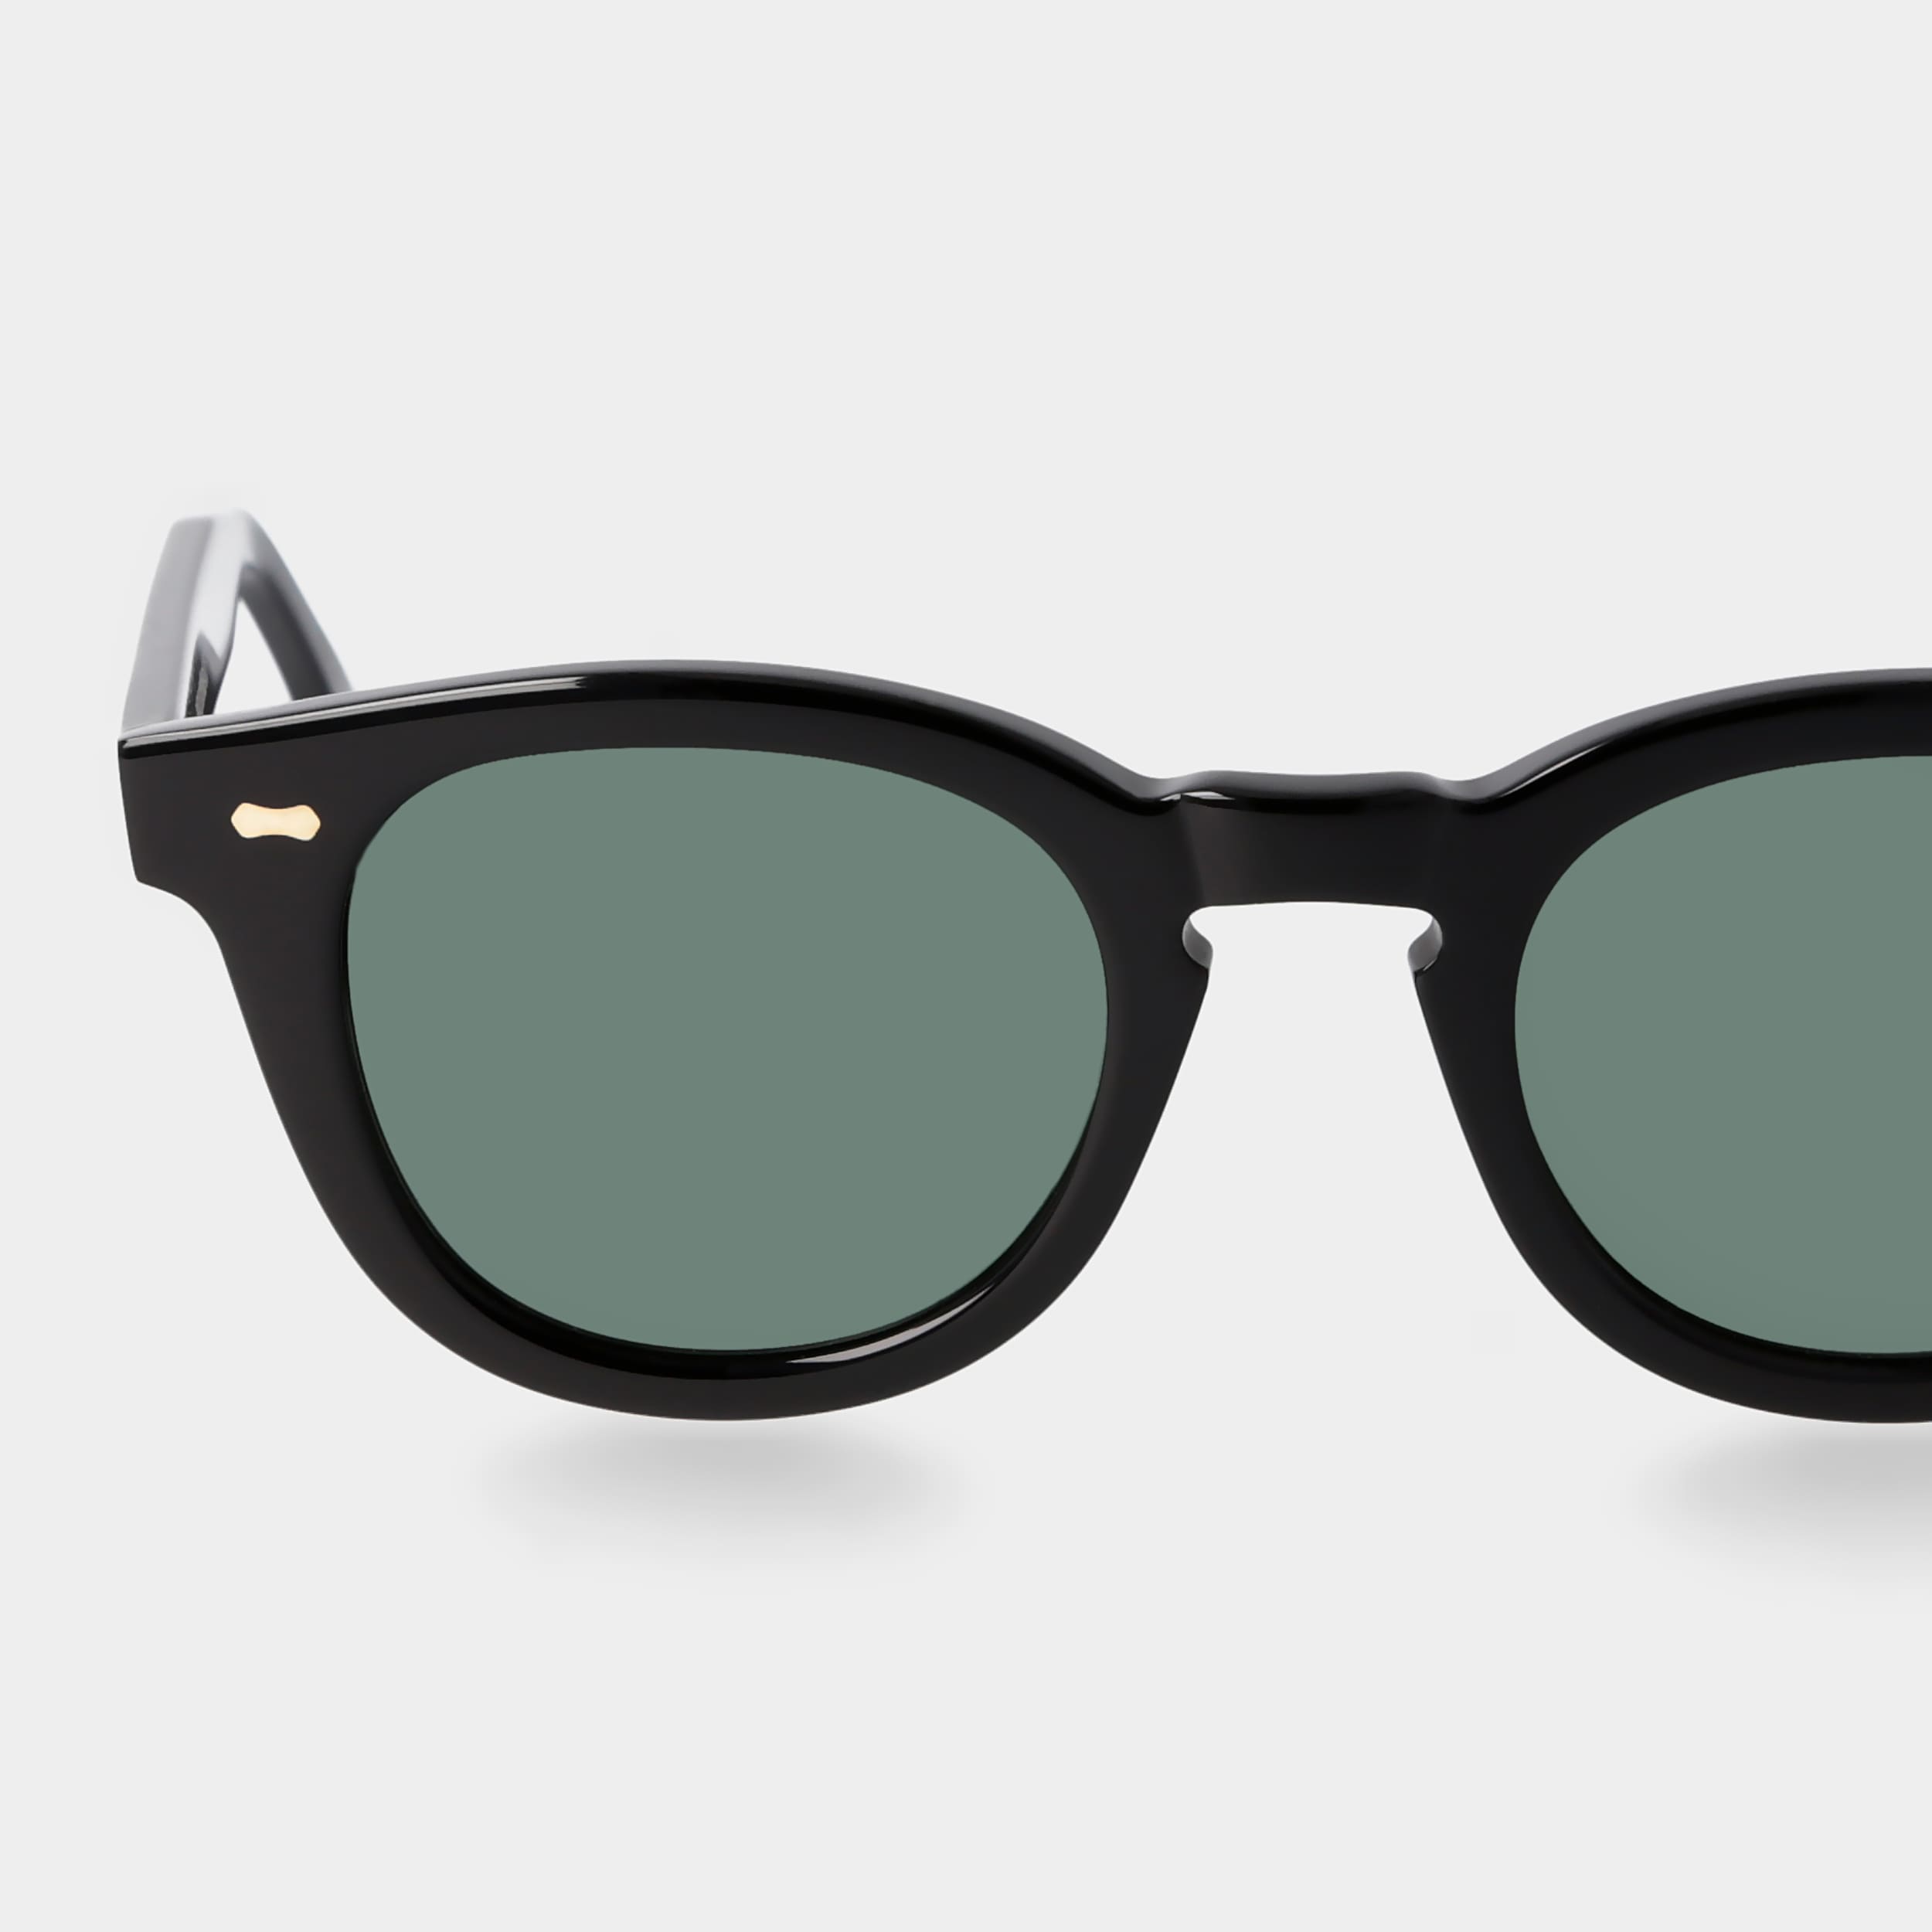 sunglasses-donegal-eco-black-bottle-green-sustainable-tbd-eyewear-lens